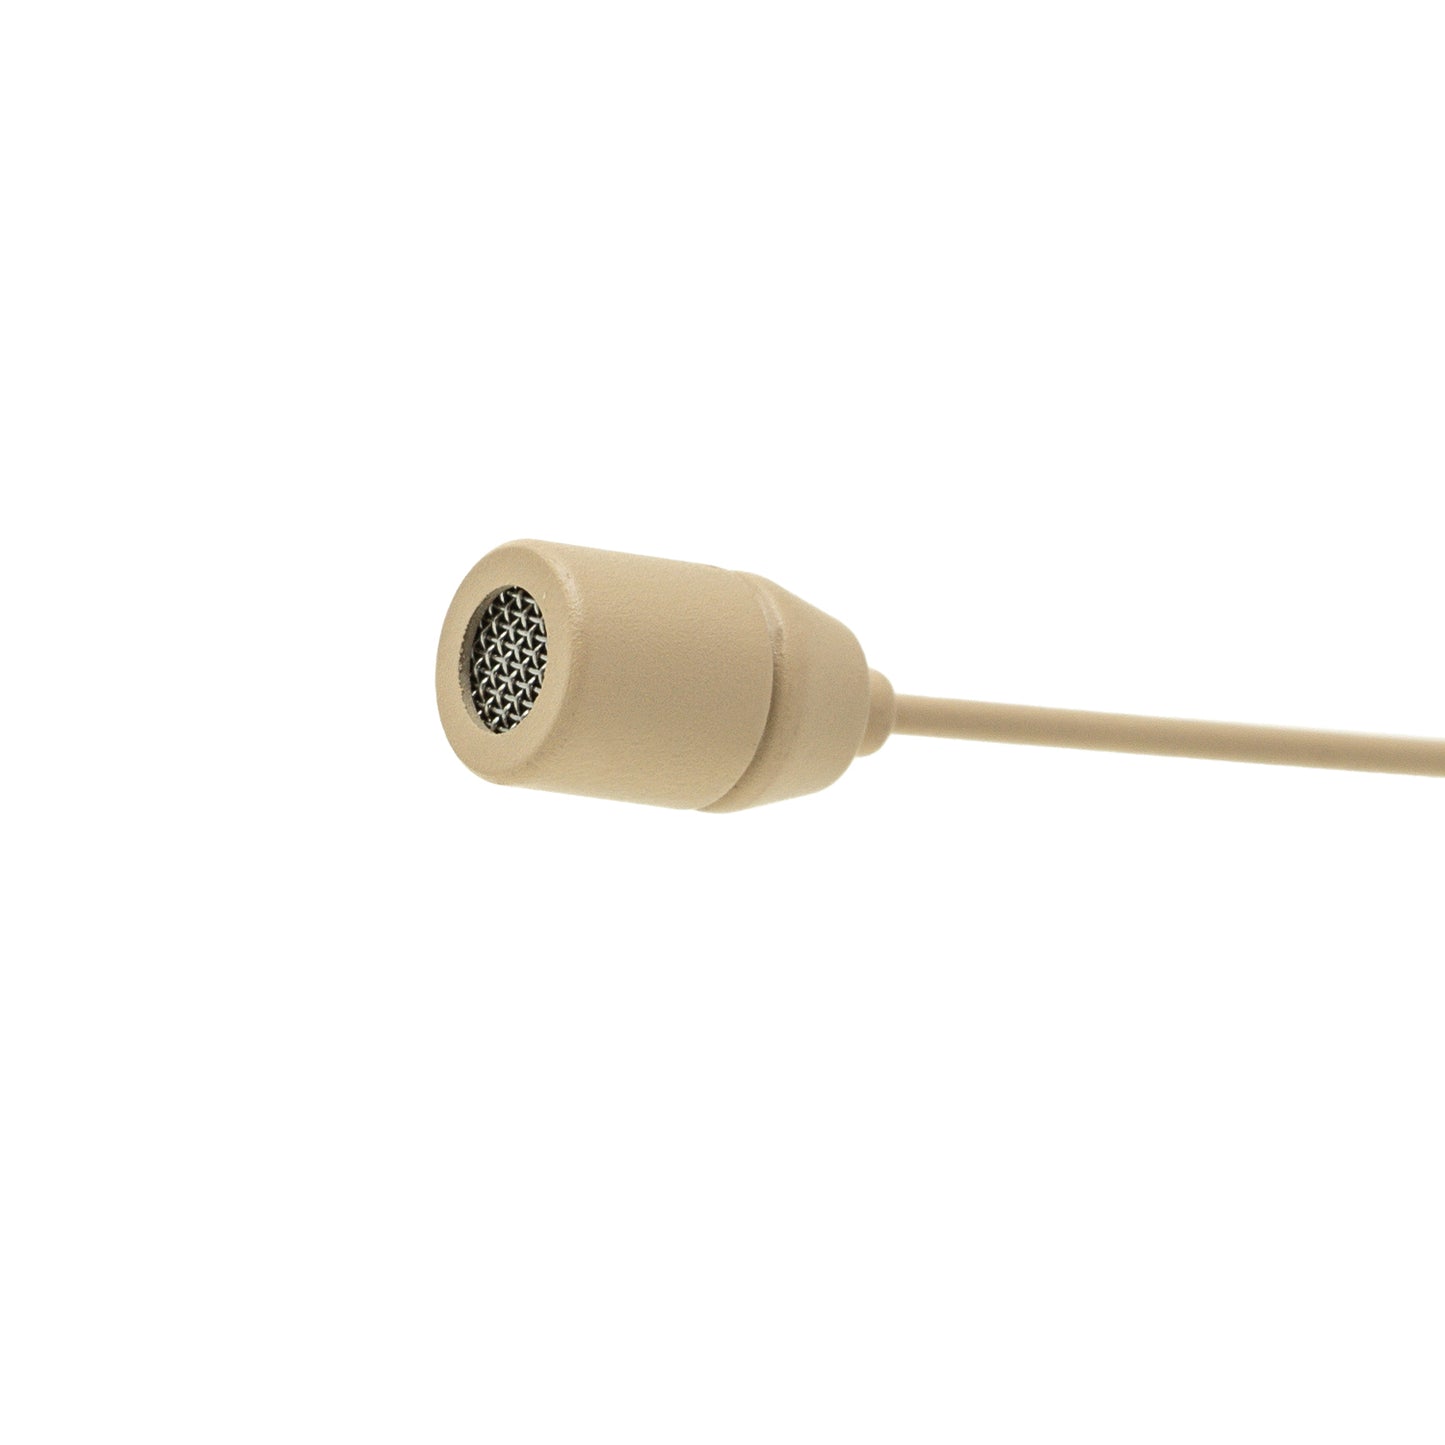 AudioDesign PA MU HS Pro Professional headband microphone with 3 adapter kit, adjustable headband width, carbon fiber texture case